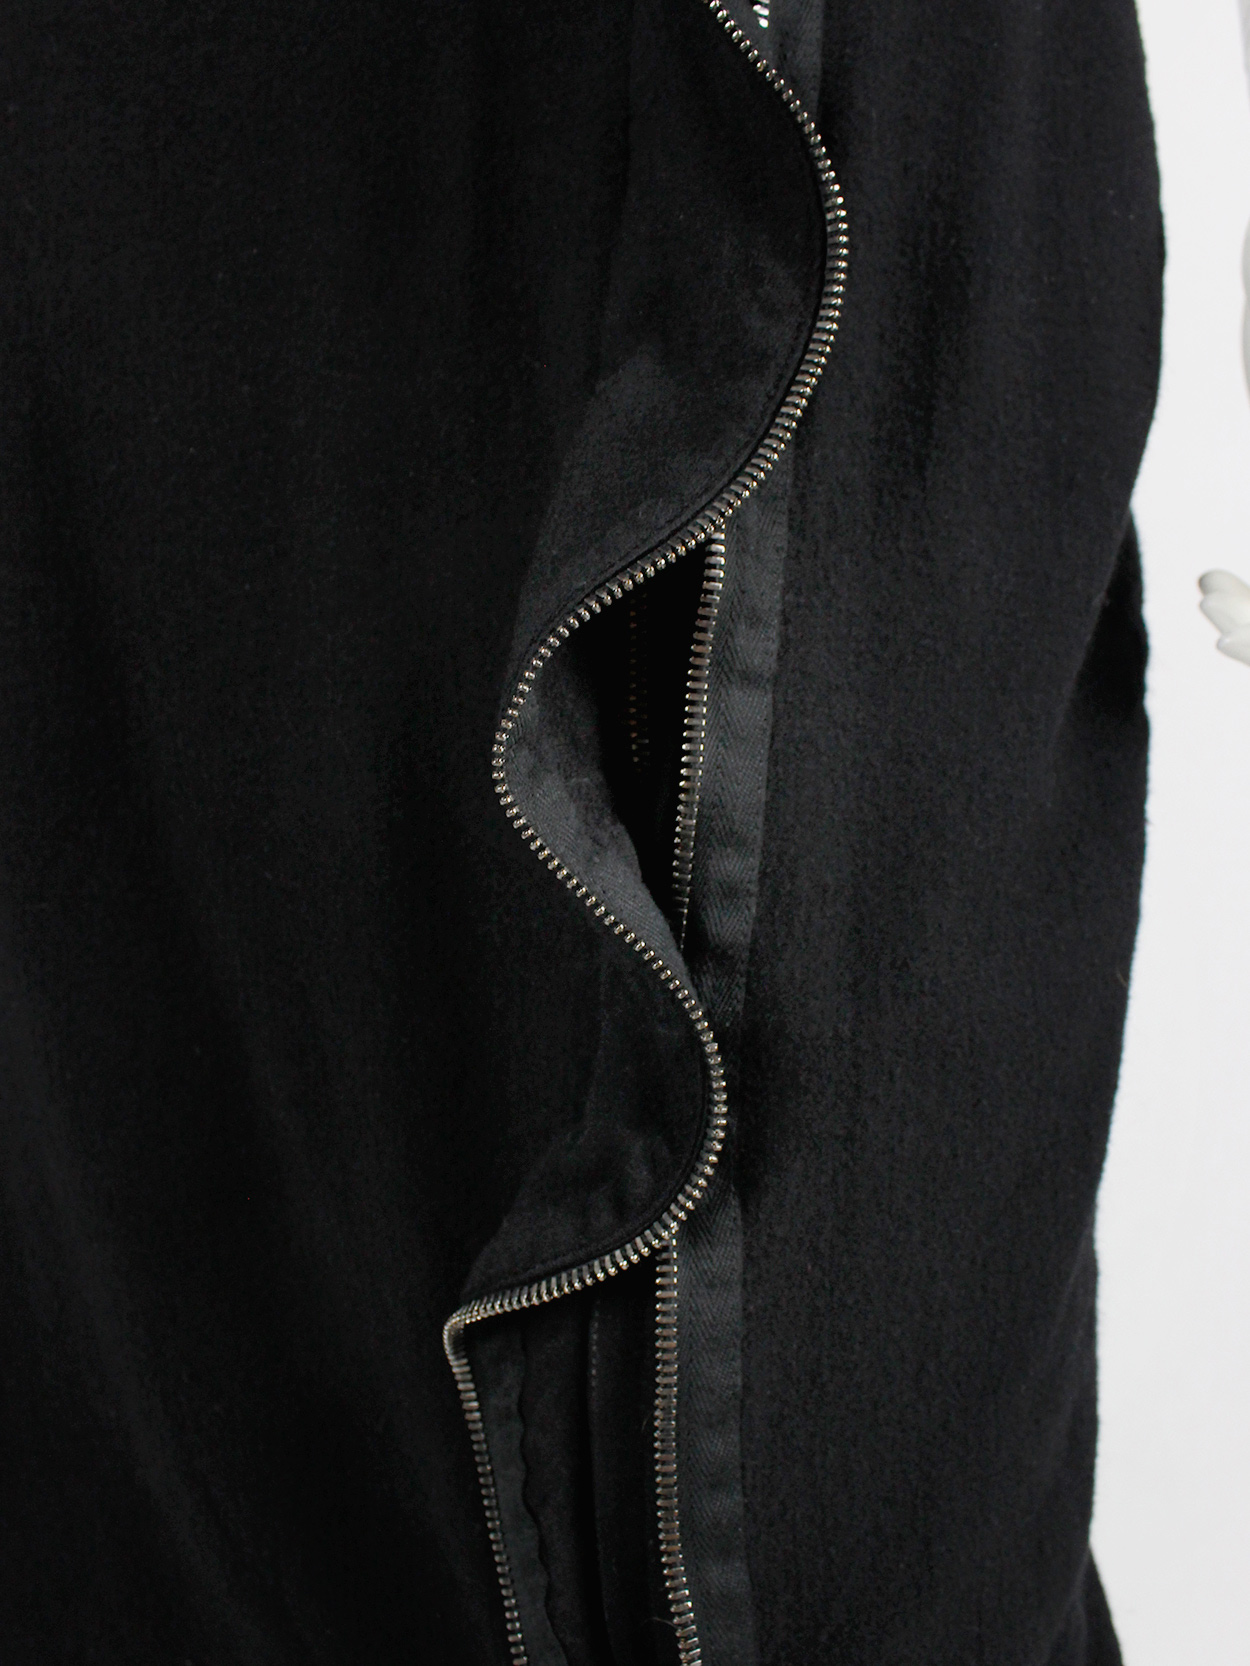 Haider Ackermann black pencil skirt with two zipper waves runway fall 2012 (8)